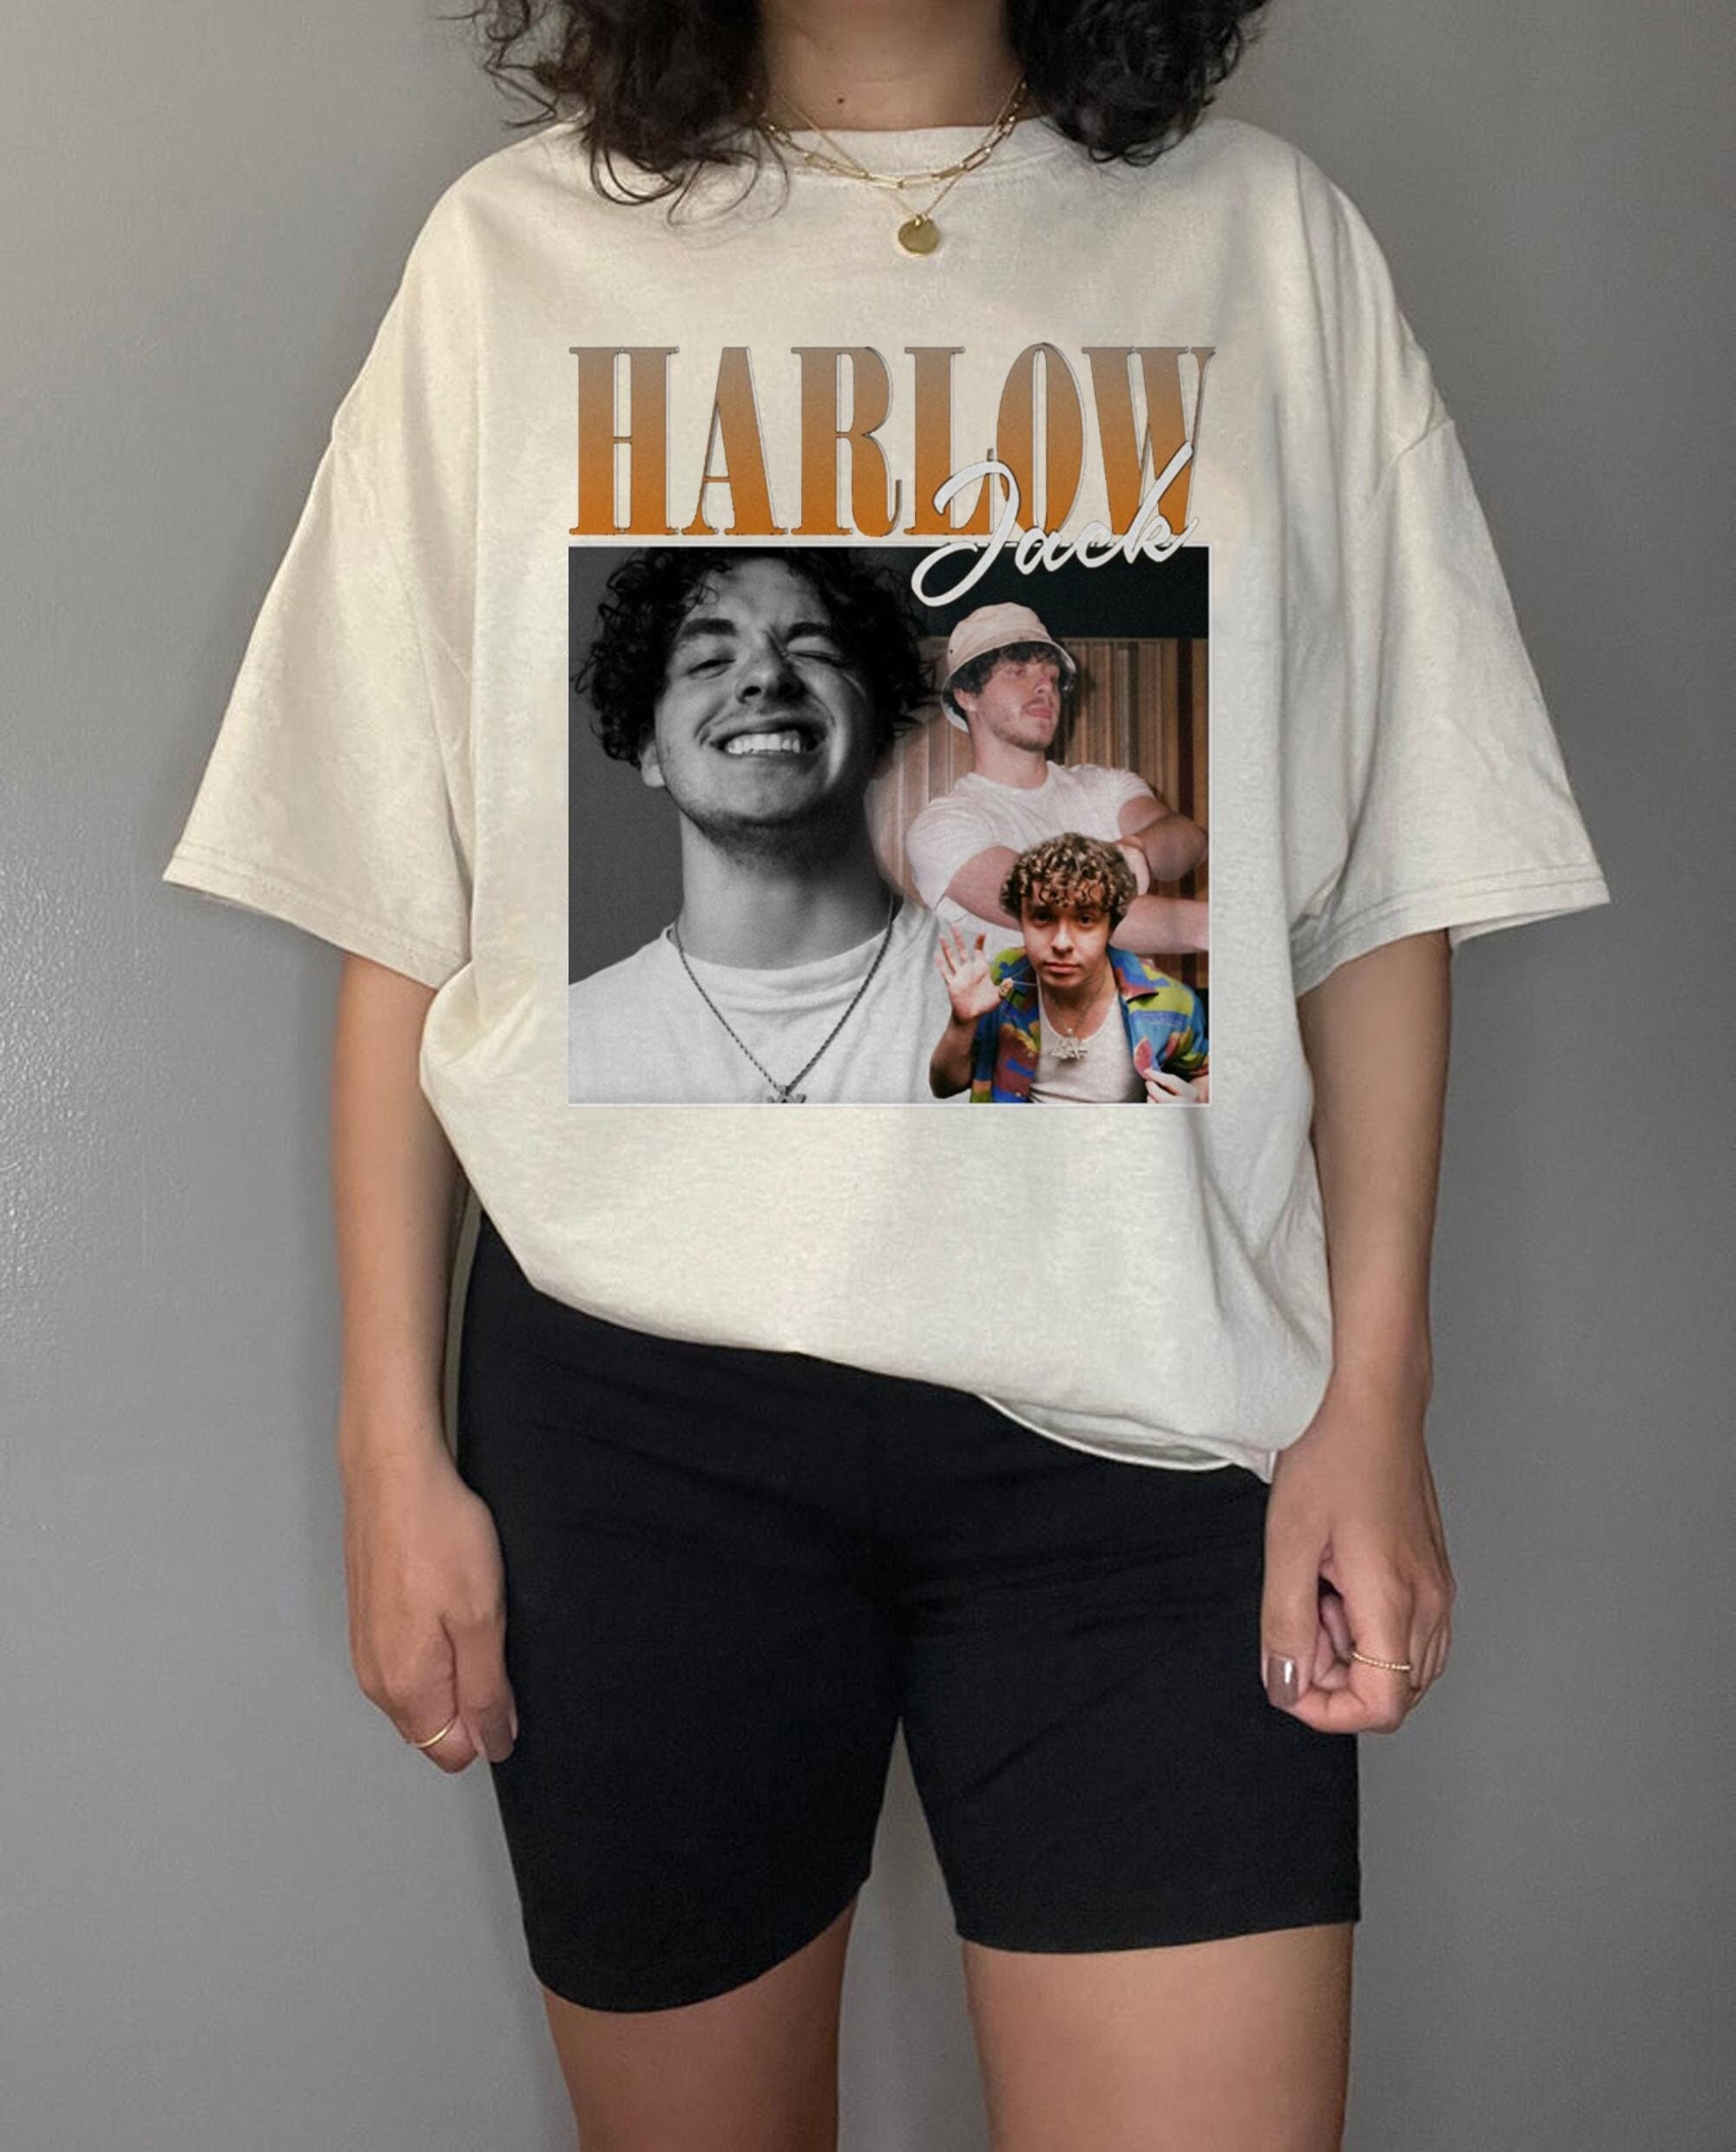 Jack Harlow Vintage Style T-Shirt DZT